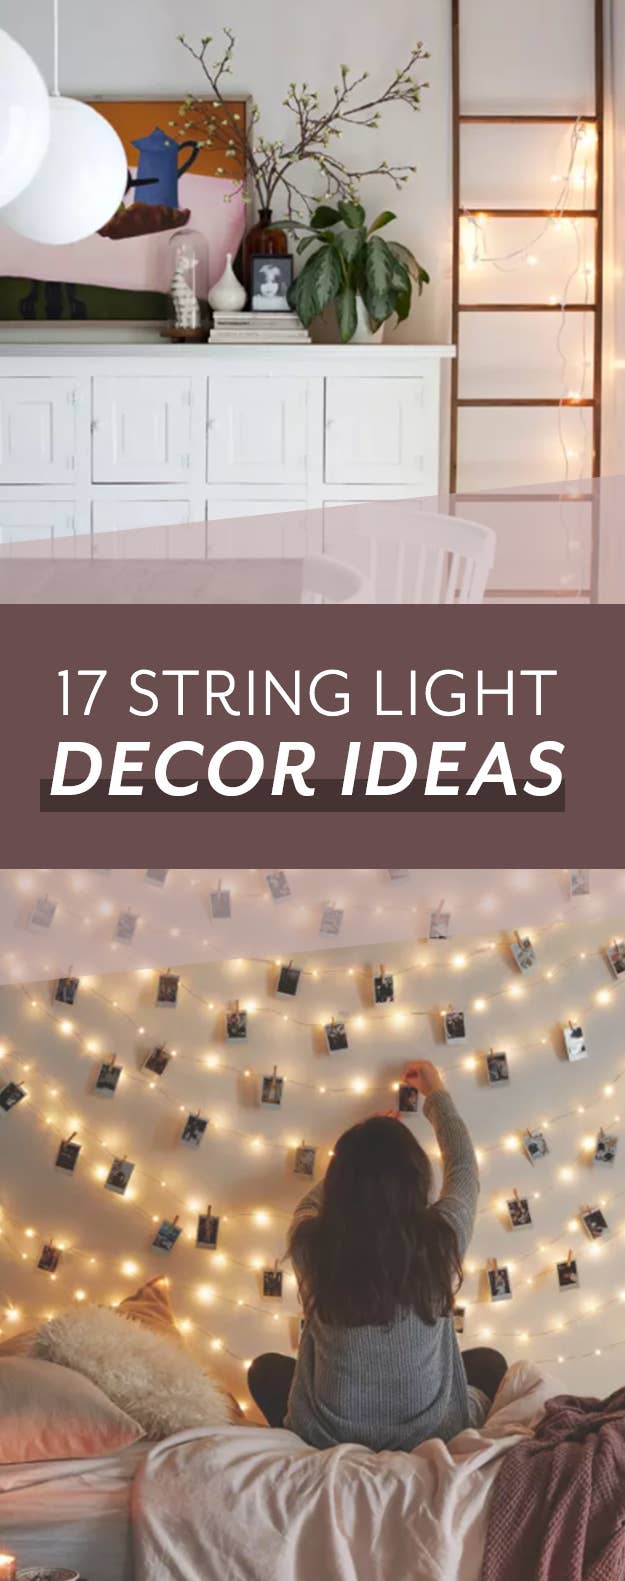 Led light decoration ideas for home. Led lights for decor 